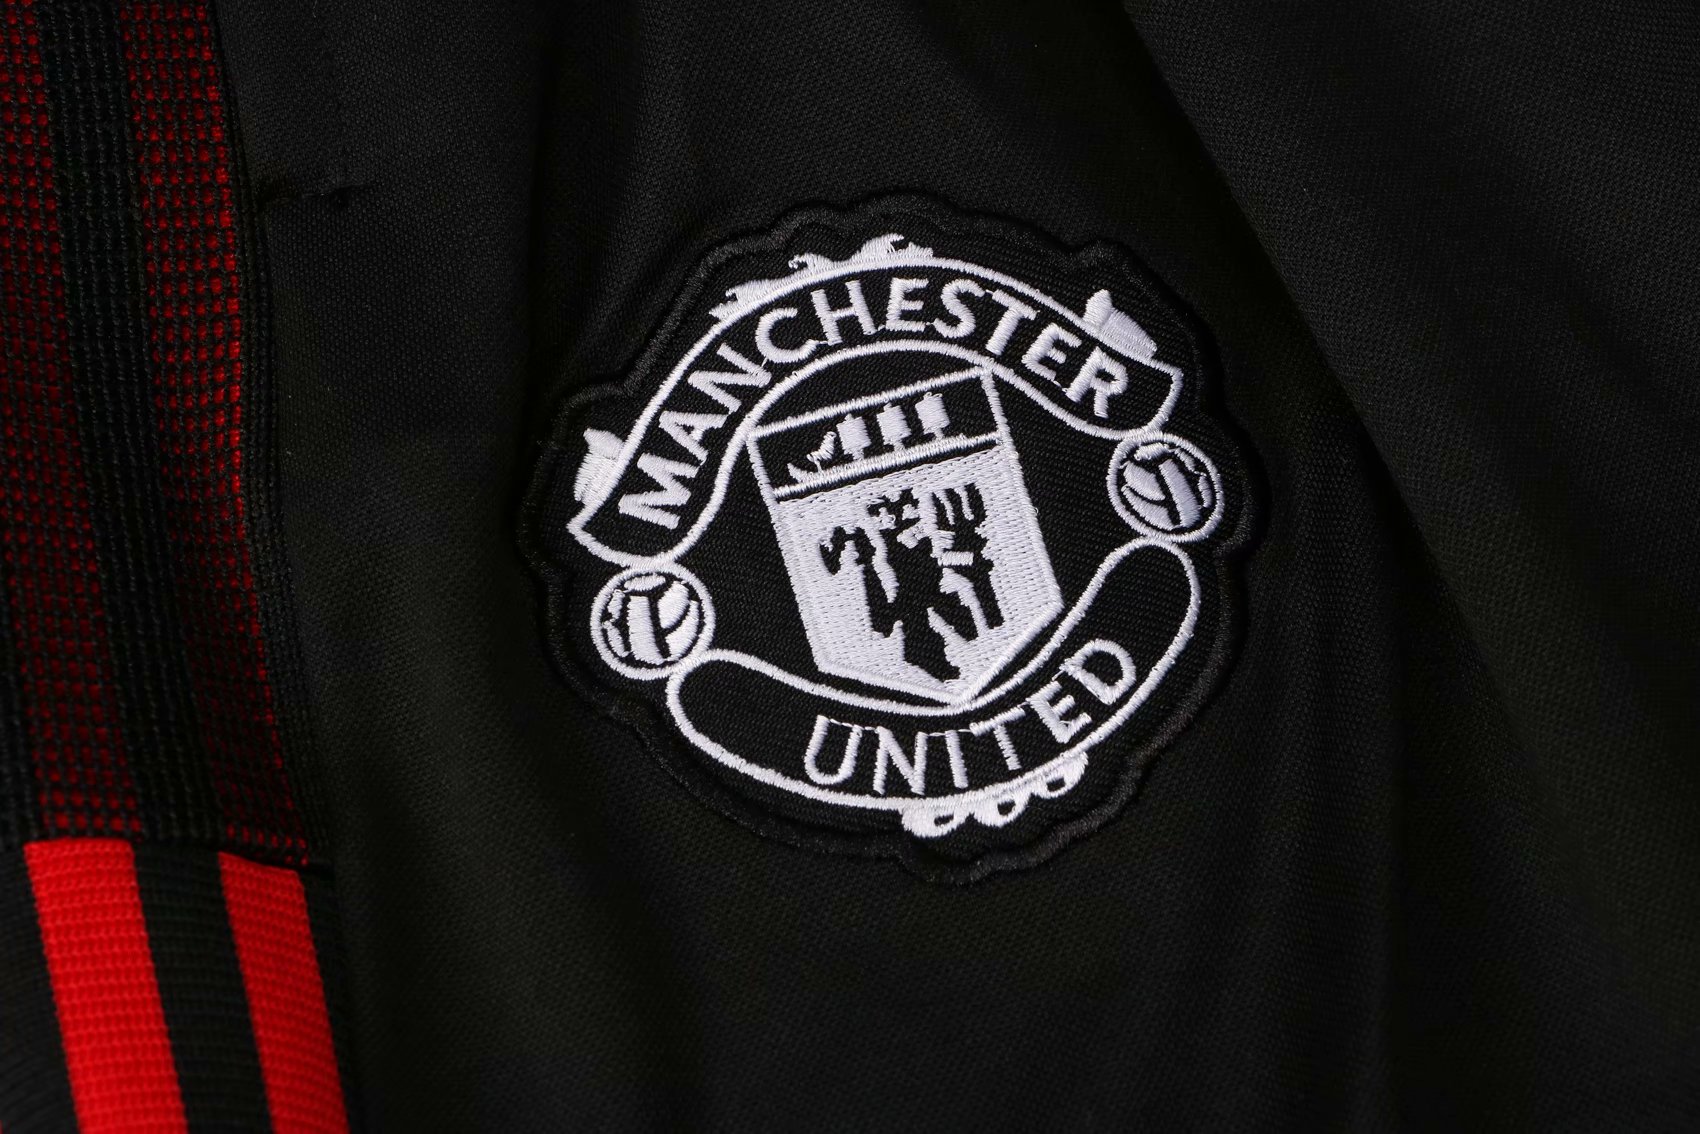 Manchester United Soccer Training Suit Jacket + Pants Black Mens 2021/22